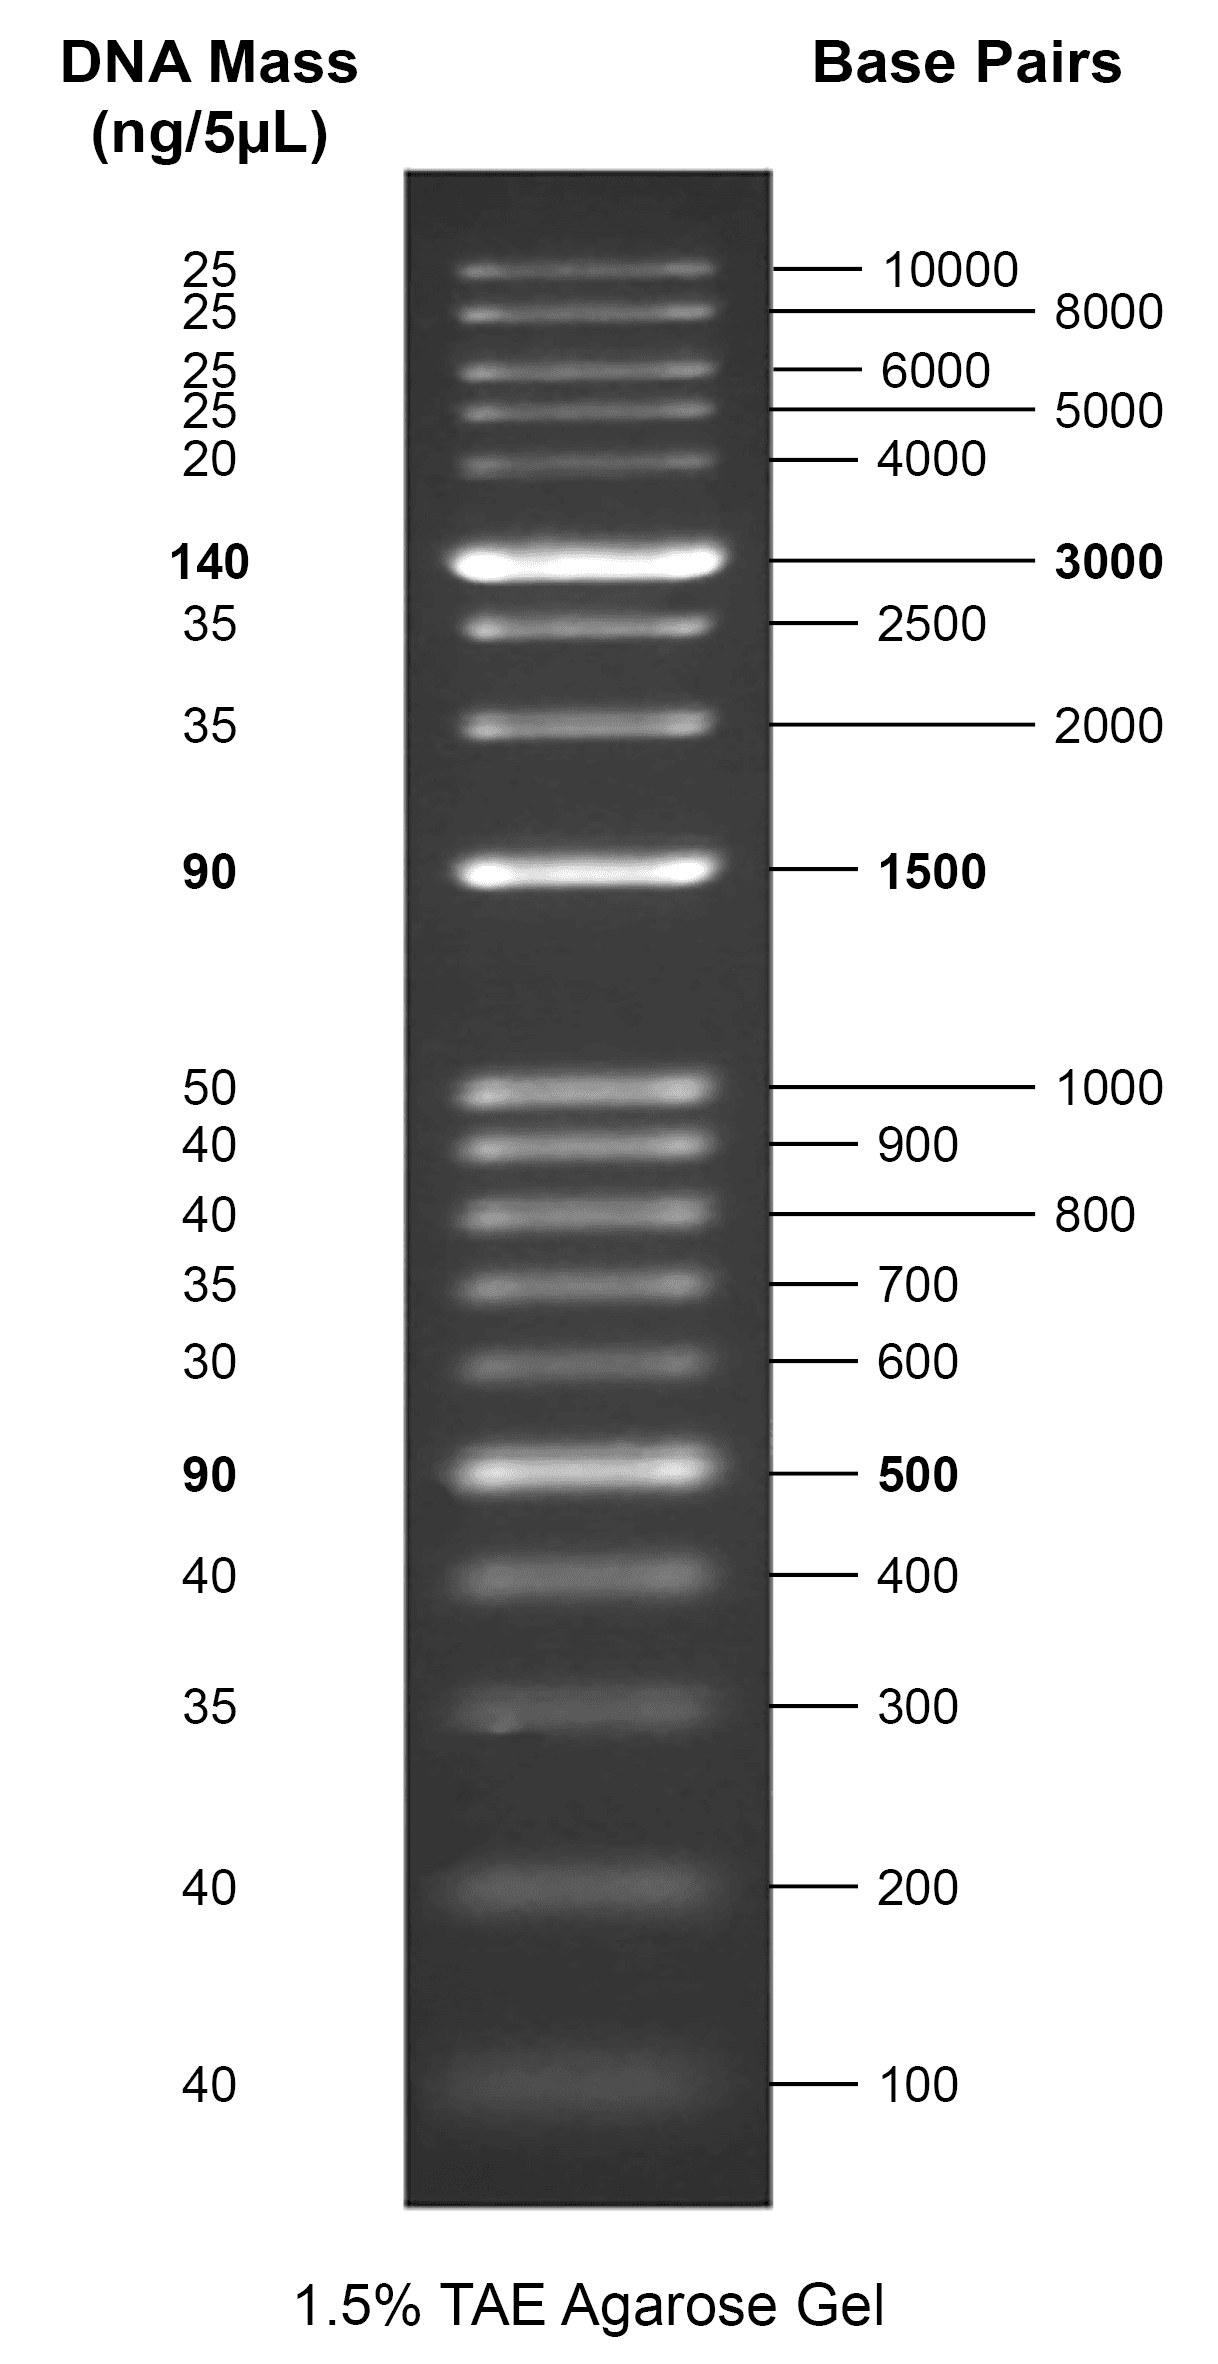 Gelite™ 100 bp-1 kb DNA Ladder on a 1.5% TAE agarose gel.